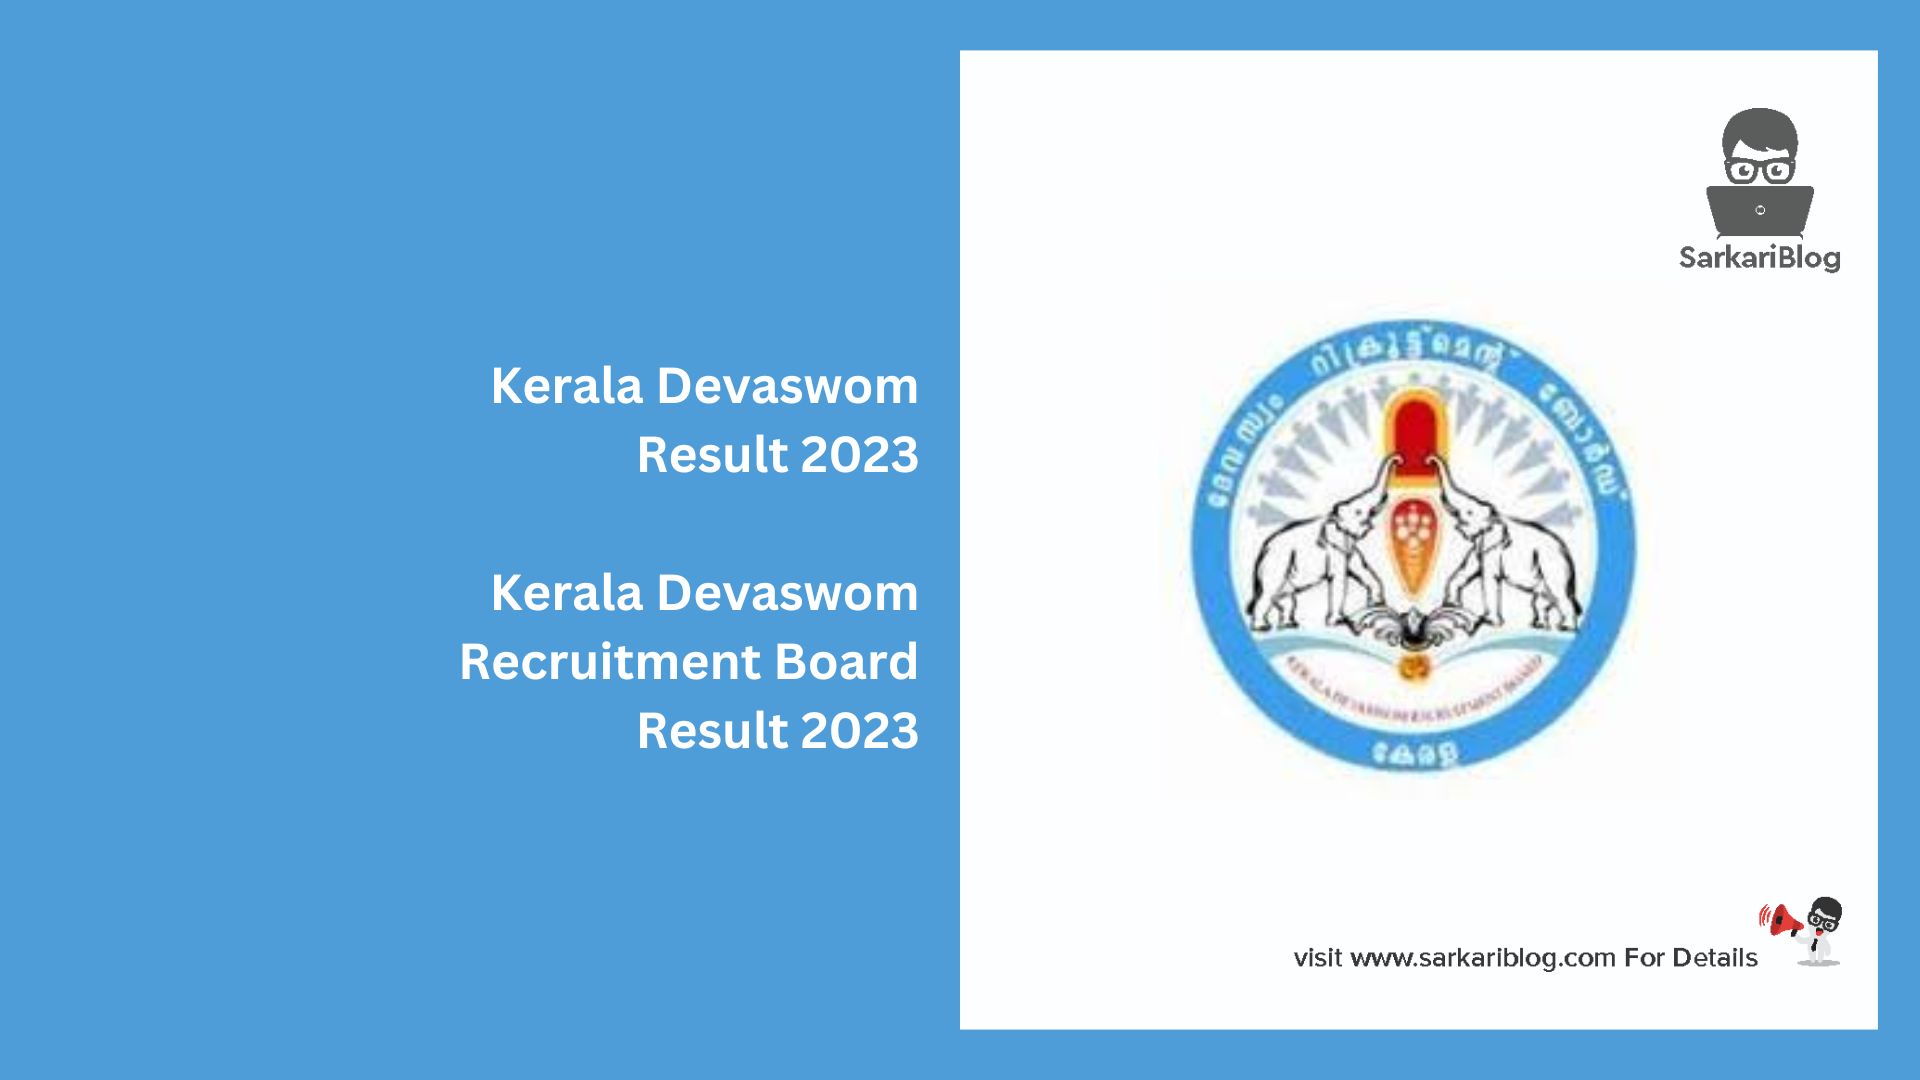 Kerala Devaswom Result 2023